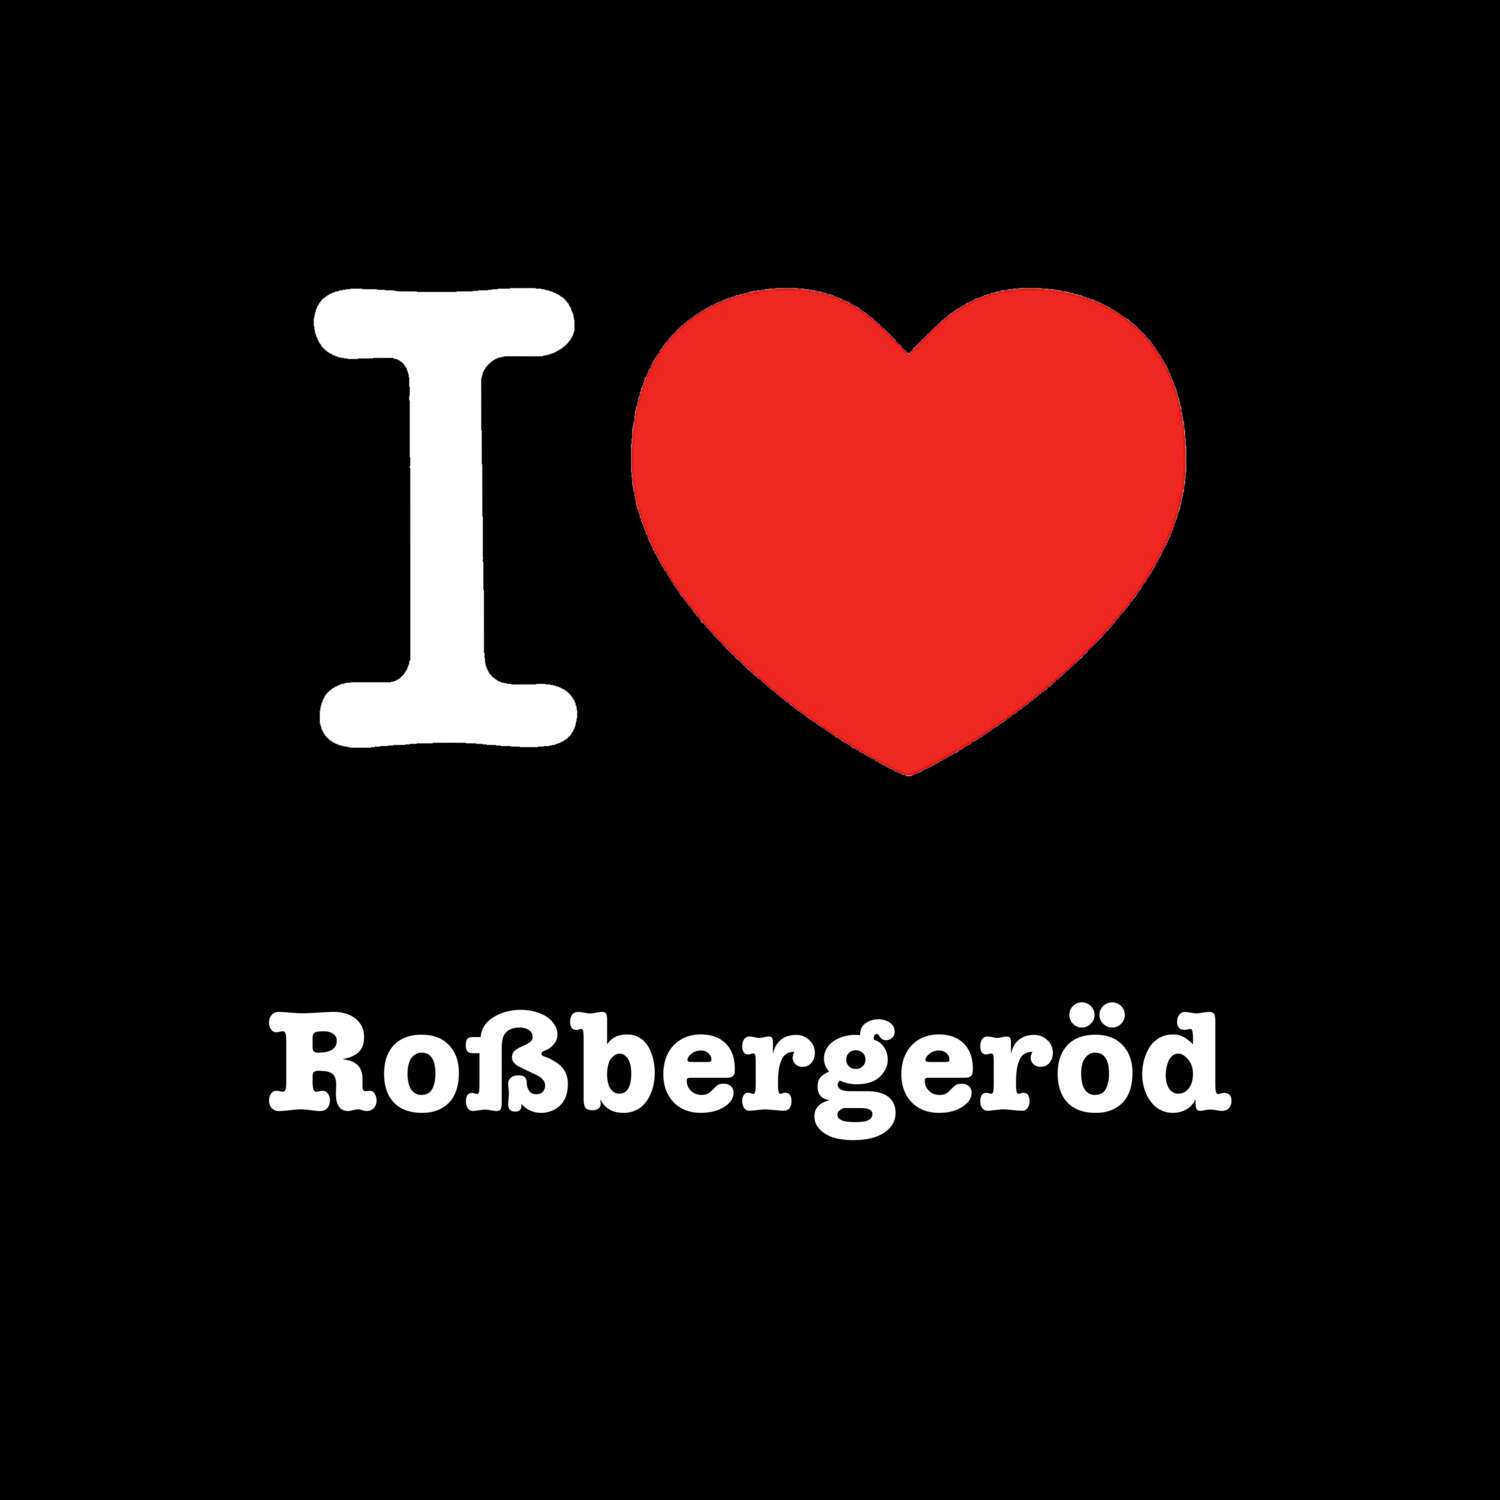 Roßbergeröd T-Shirt »I love«